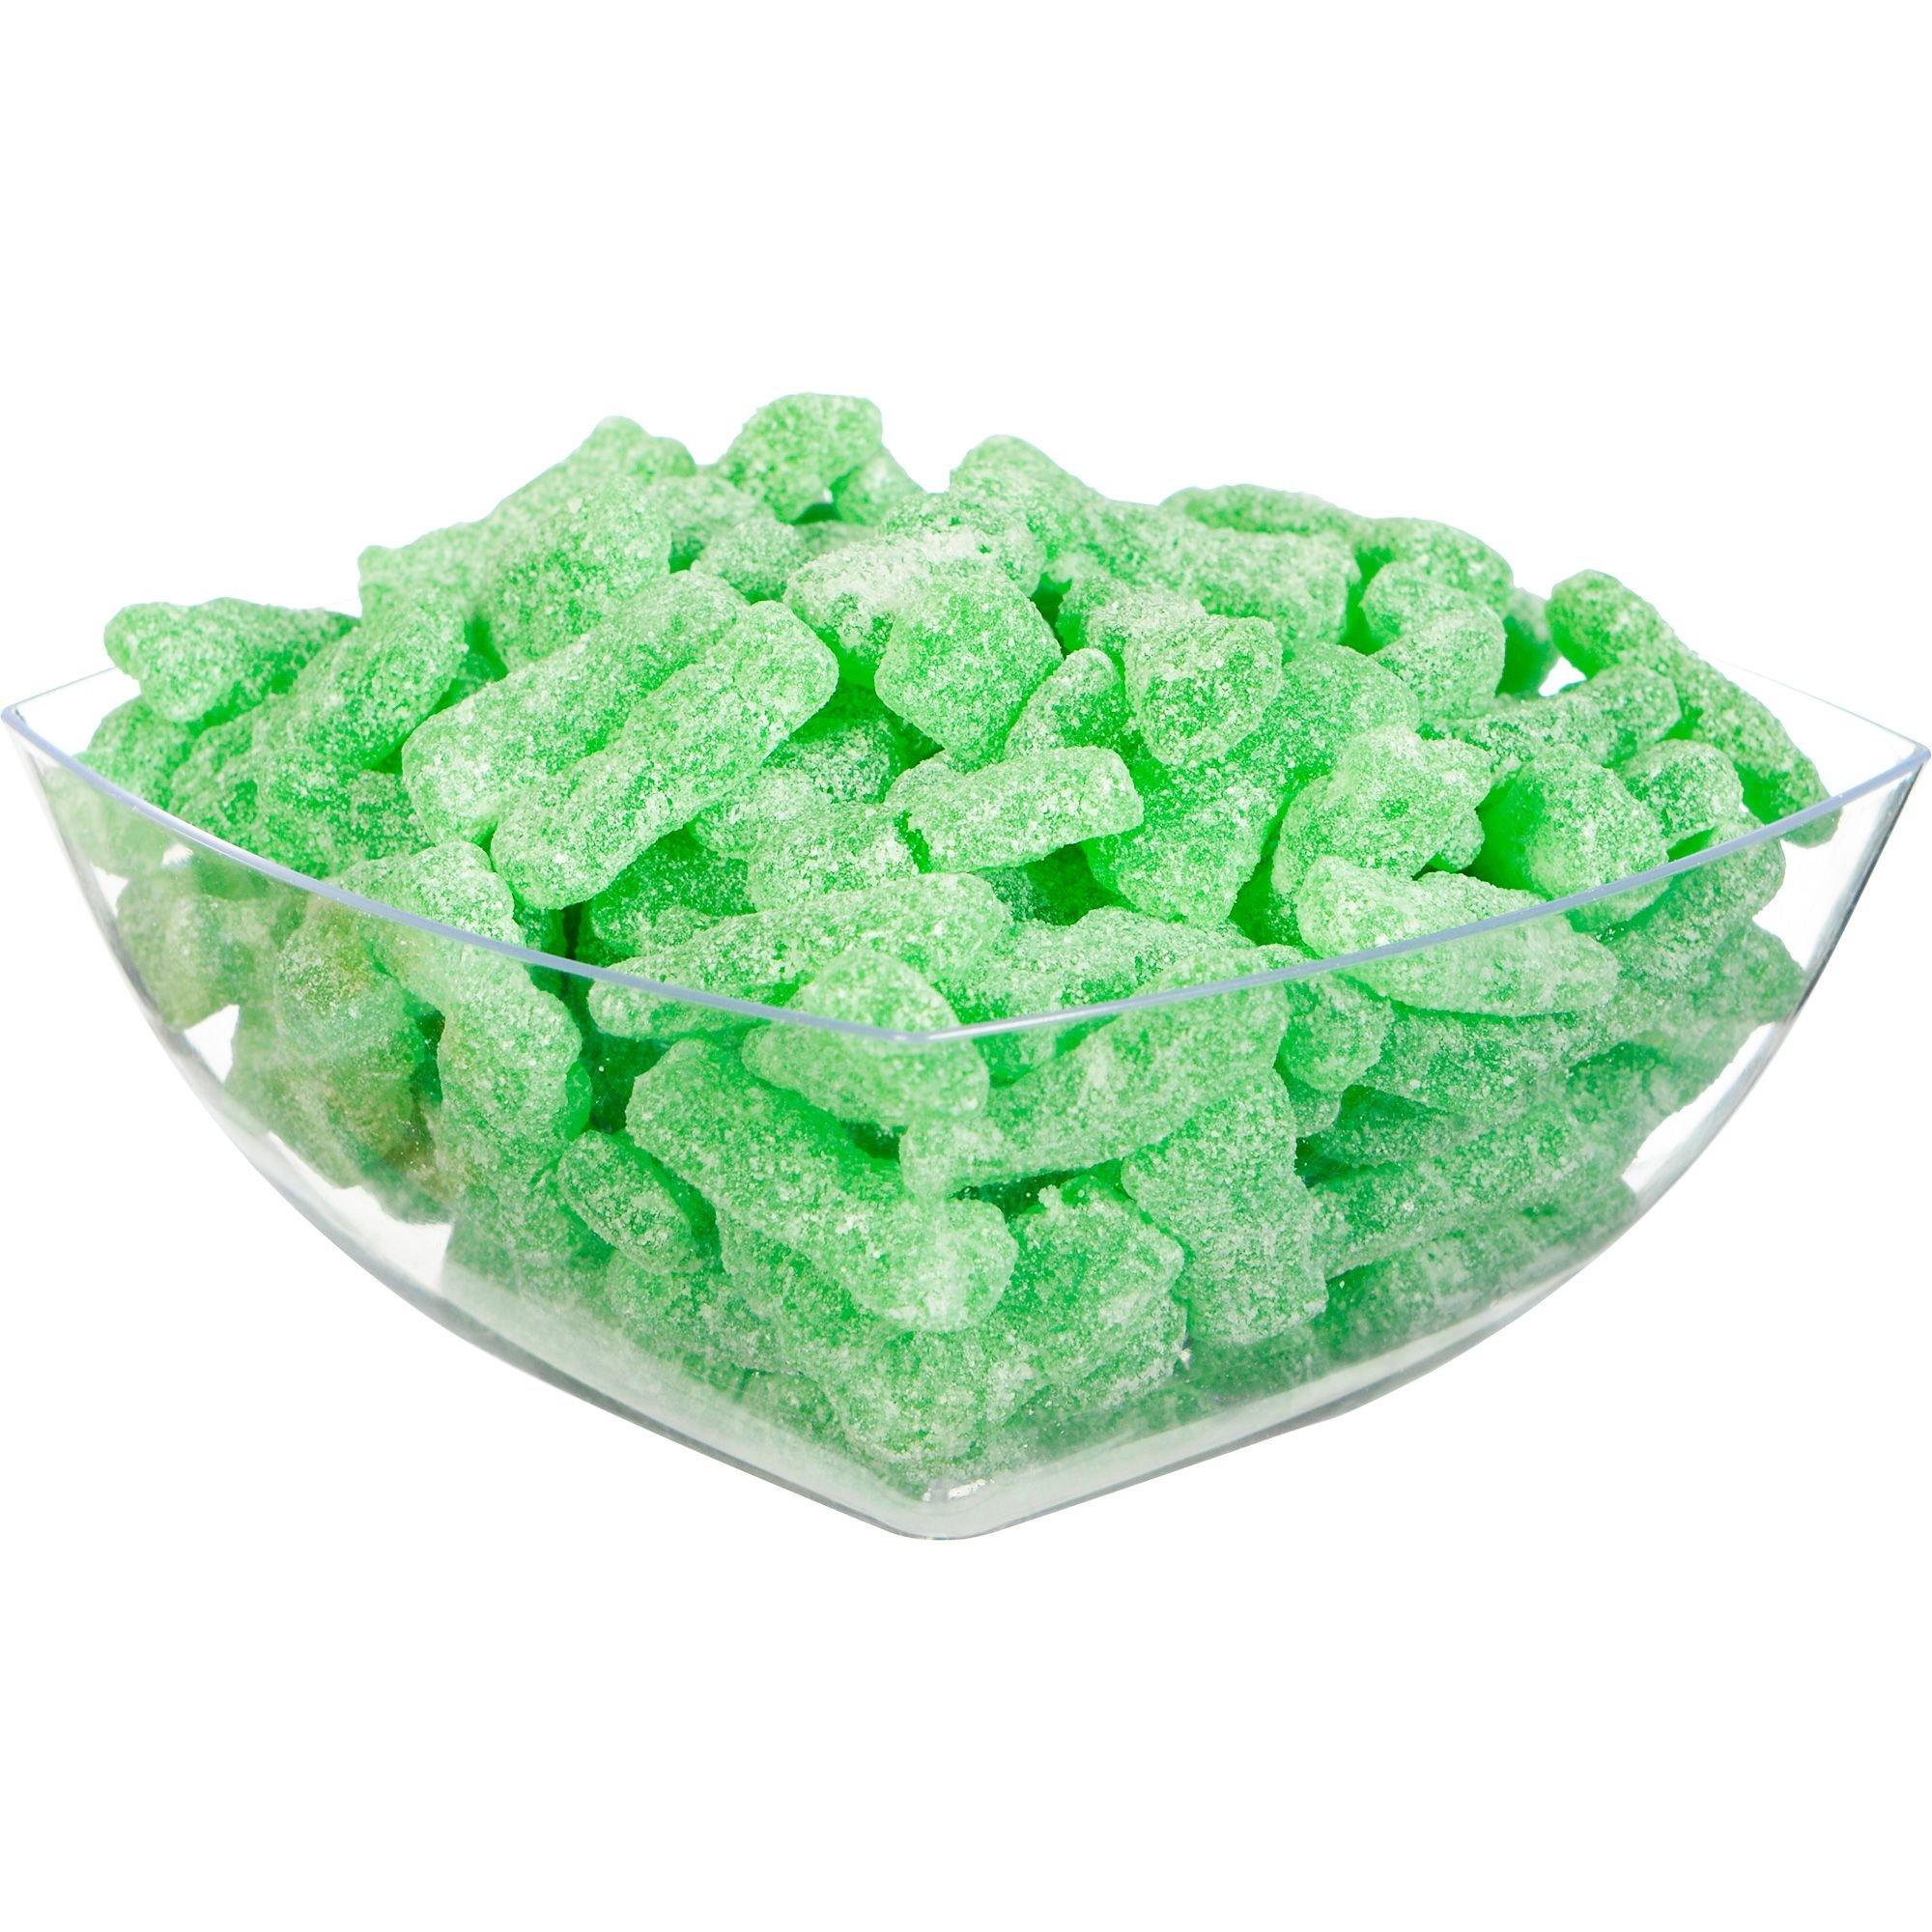 Green Sour Patch Kids, 16oz - Lime Flavor